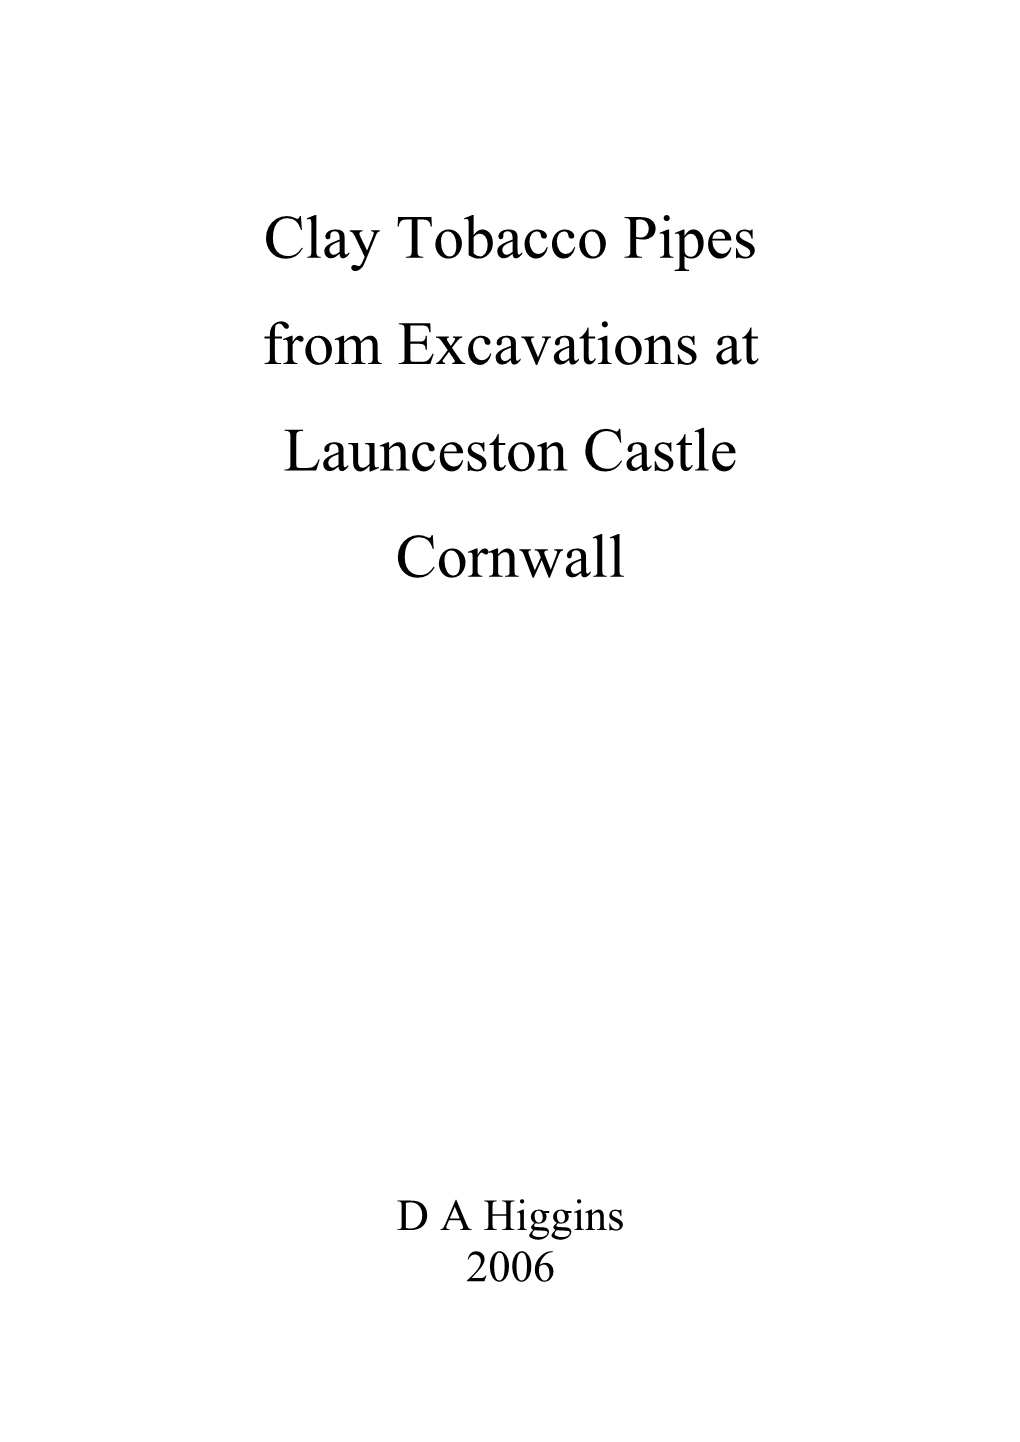 Excavations at Launceston Castle Cornwall